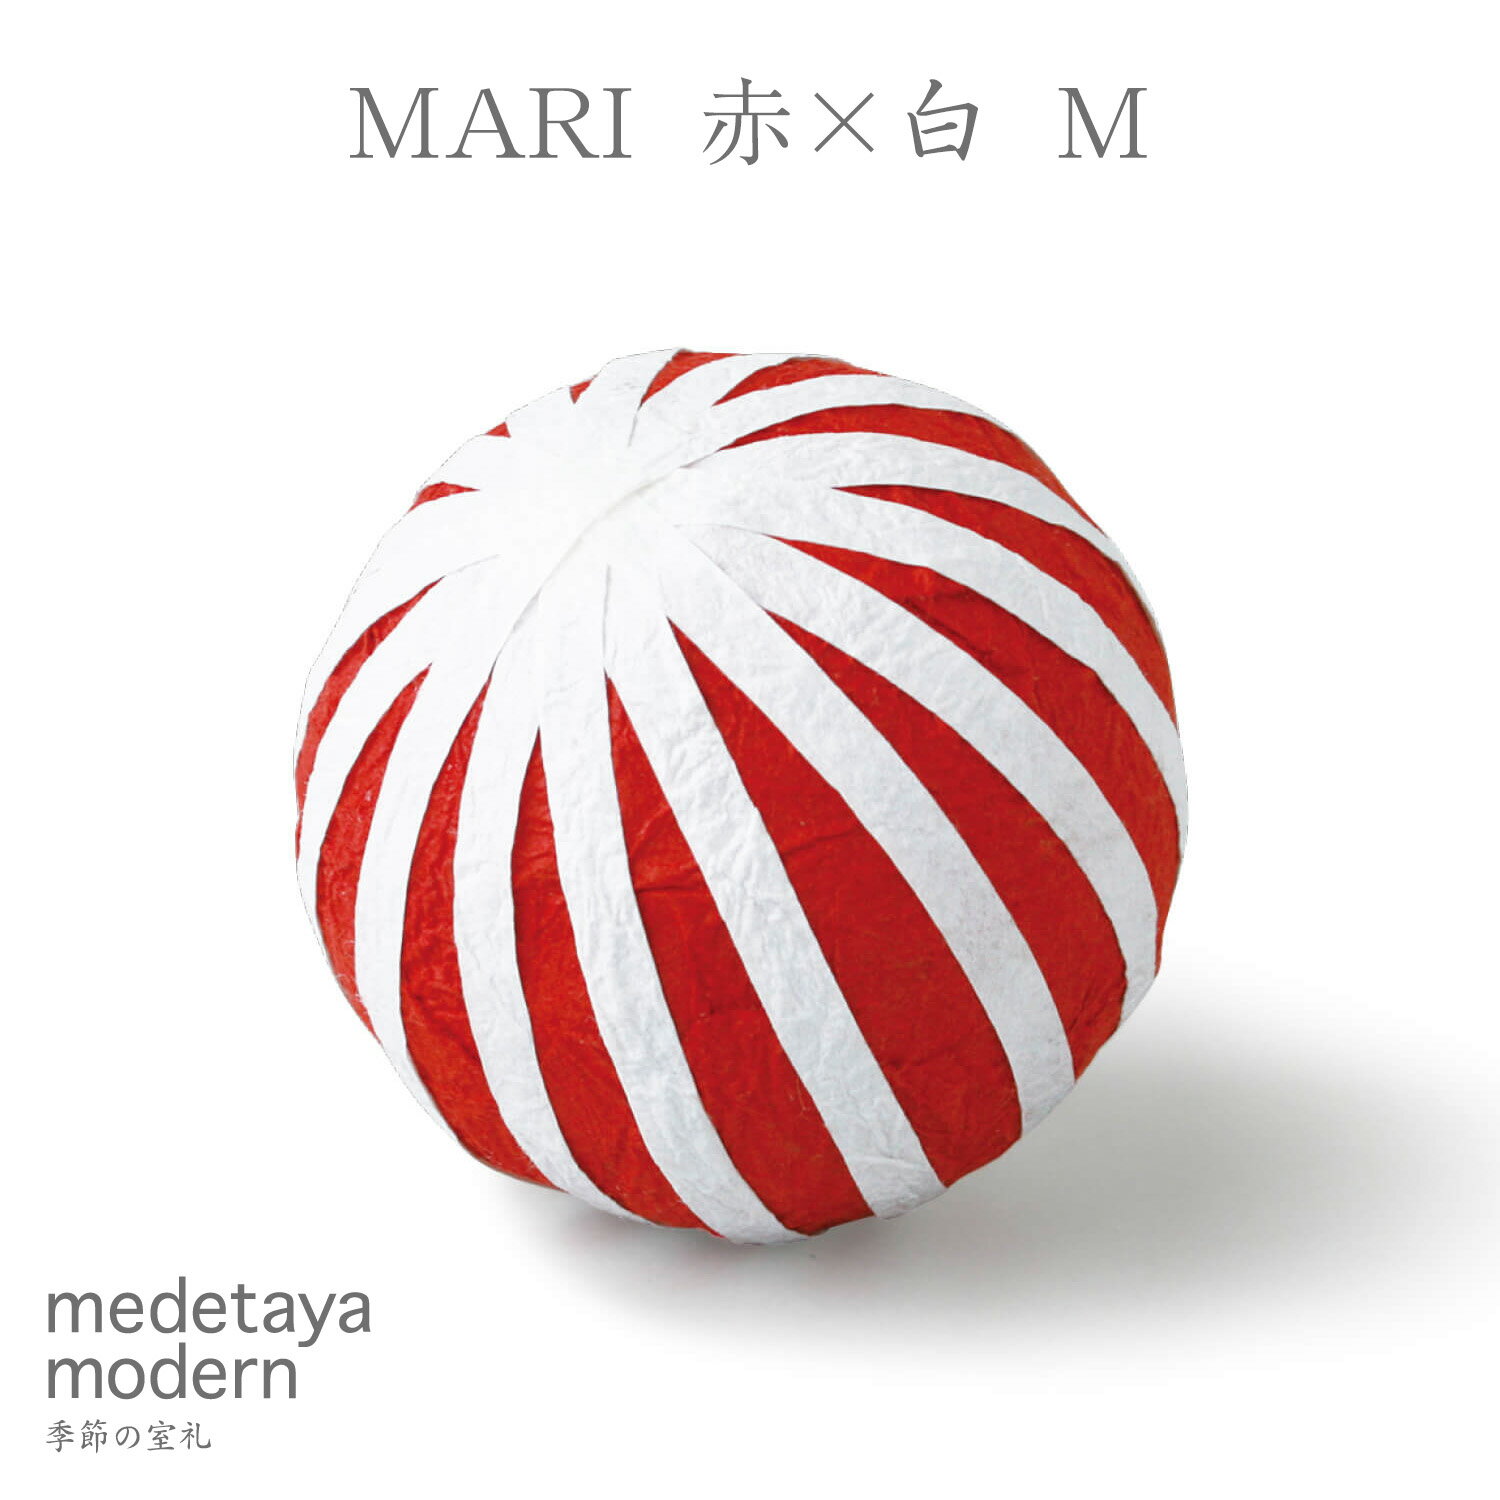 medetaya modern 和紙 お正月飾り インテリア 置物 オブジェ MARI 赤 白 M